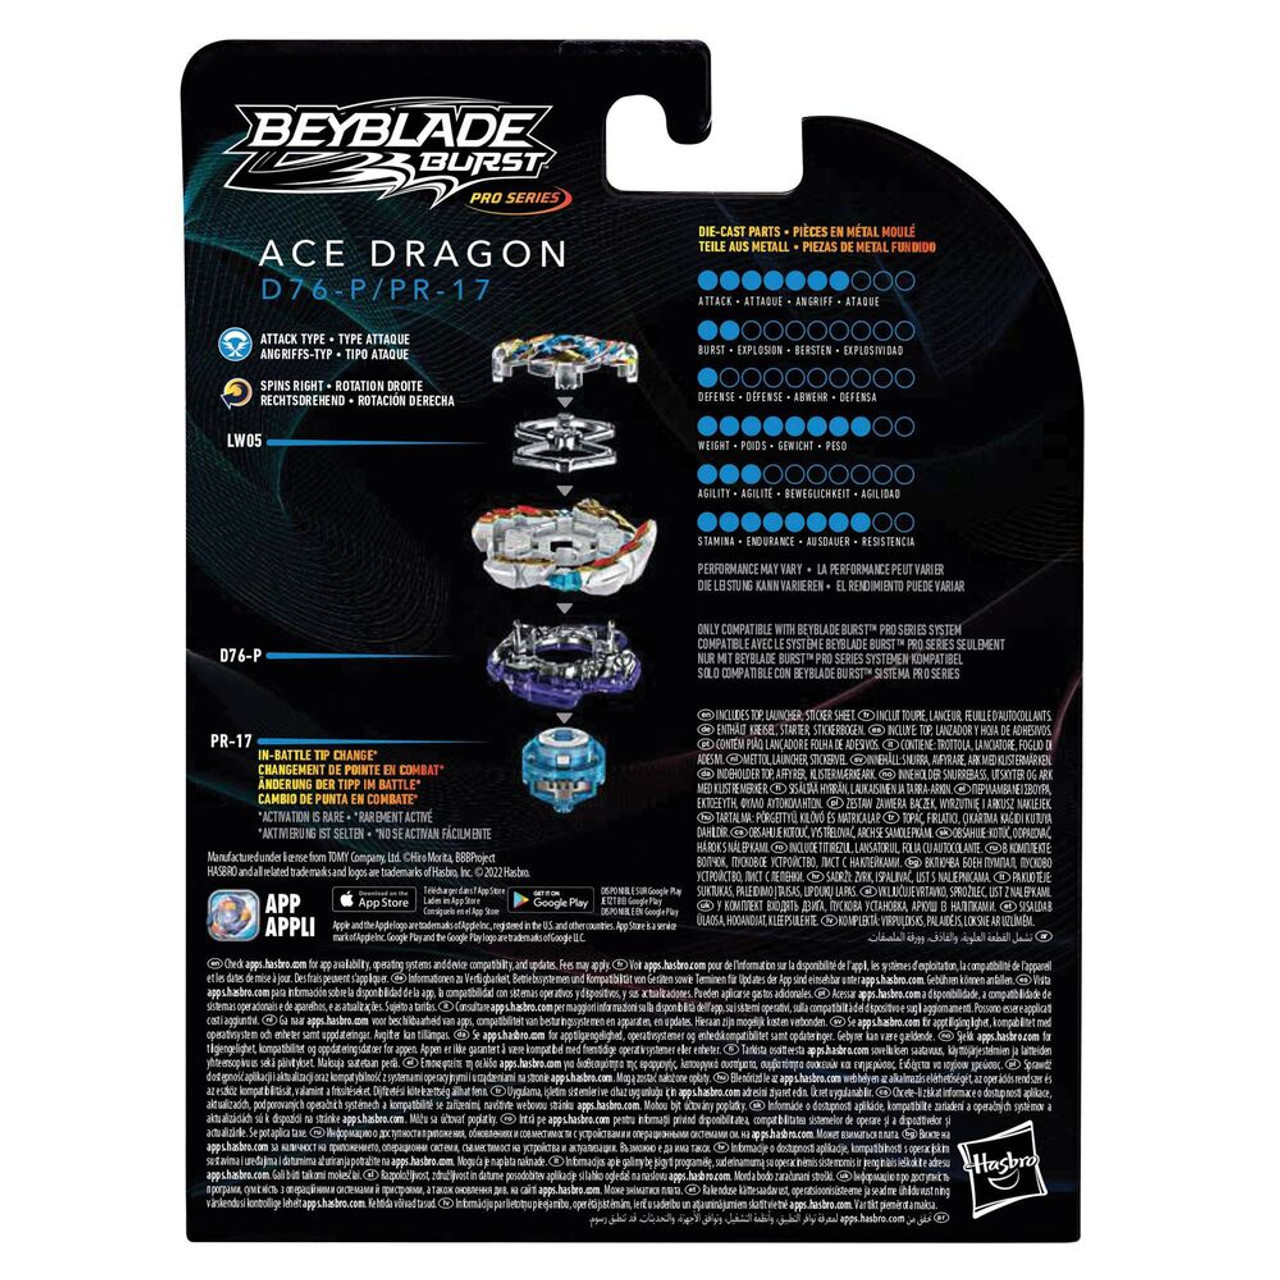 Beyblade Original Hasbro - Ace Dragon D5 - Kerbeus K4 - 2